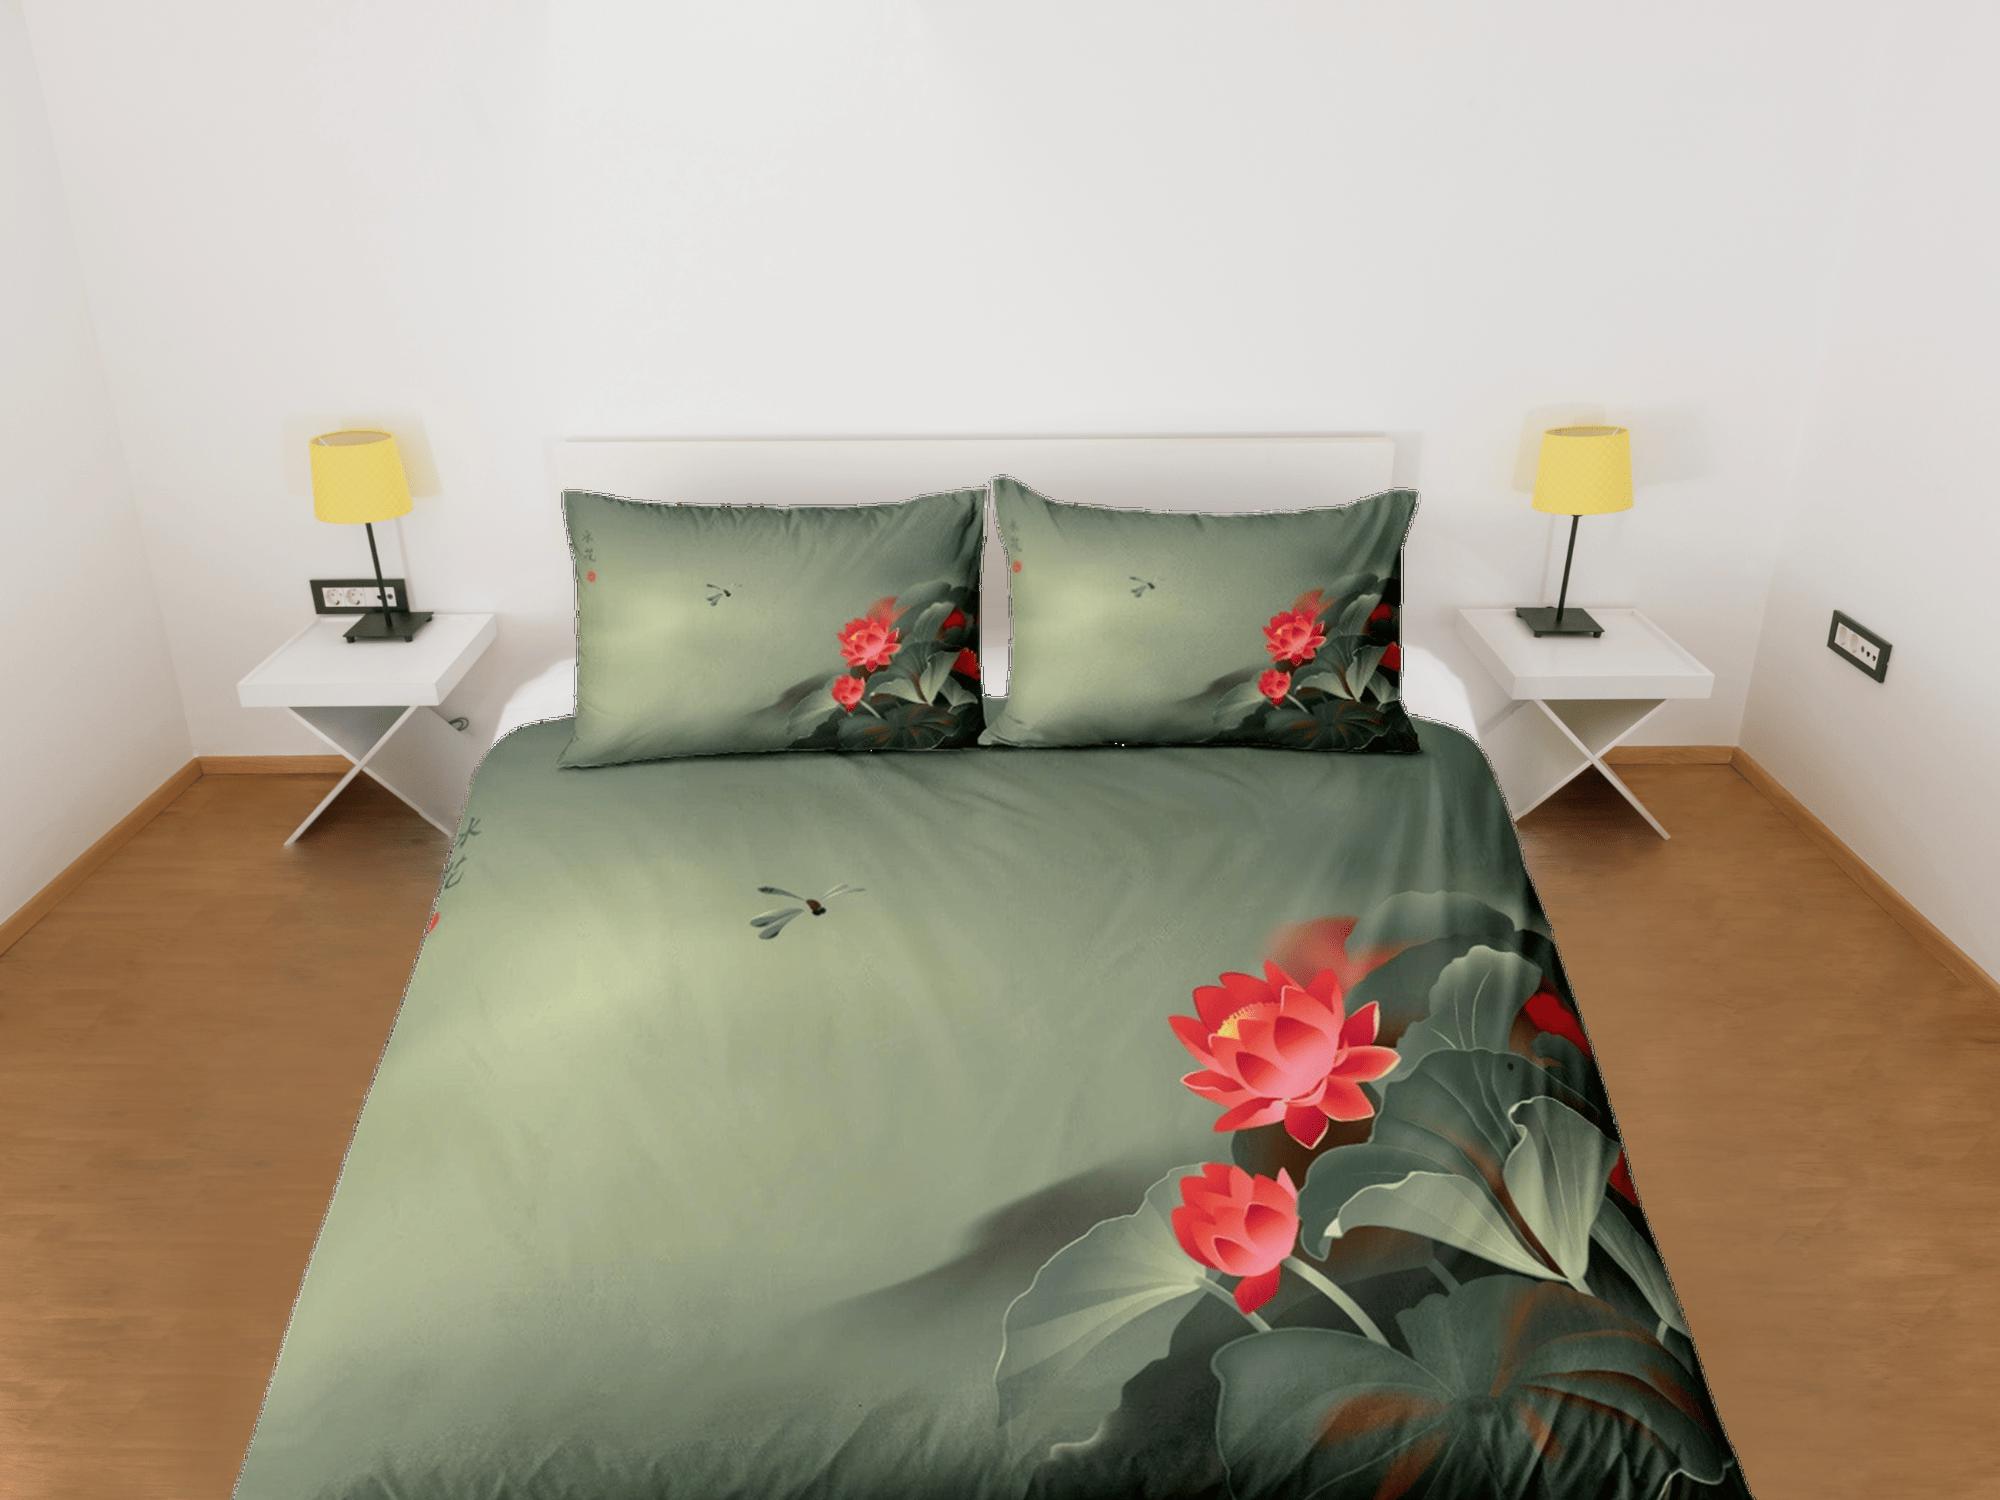 daintyduvet Lotus floral green duvet cover colorful bedding, teen girl bedroom, baby girl crib bedding boho maximalist bedspread aesthetic bedding